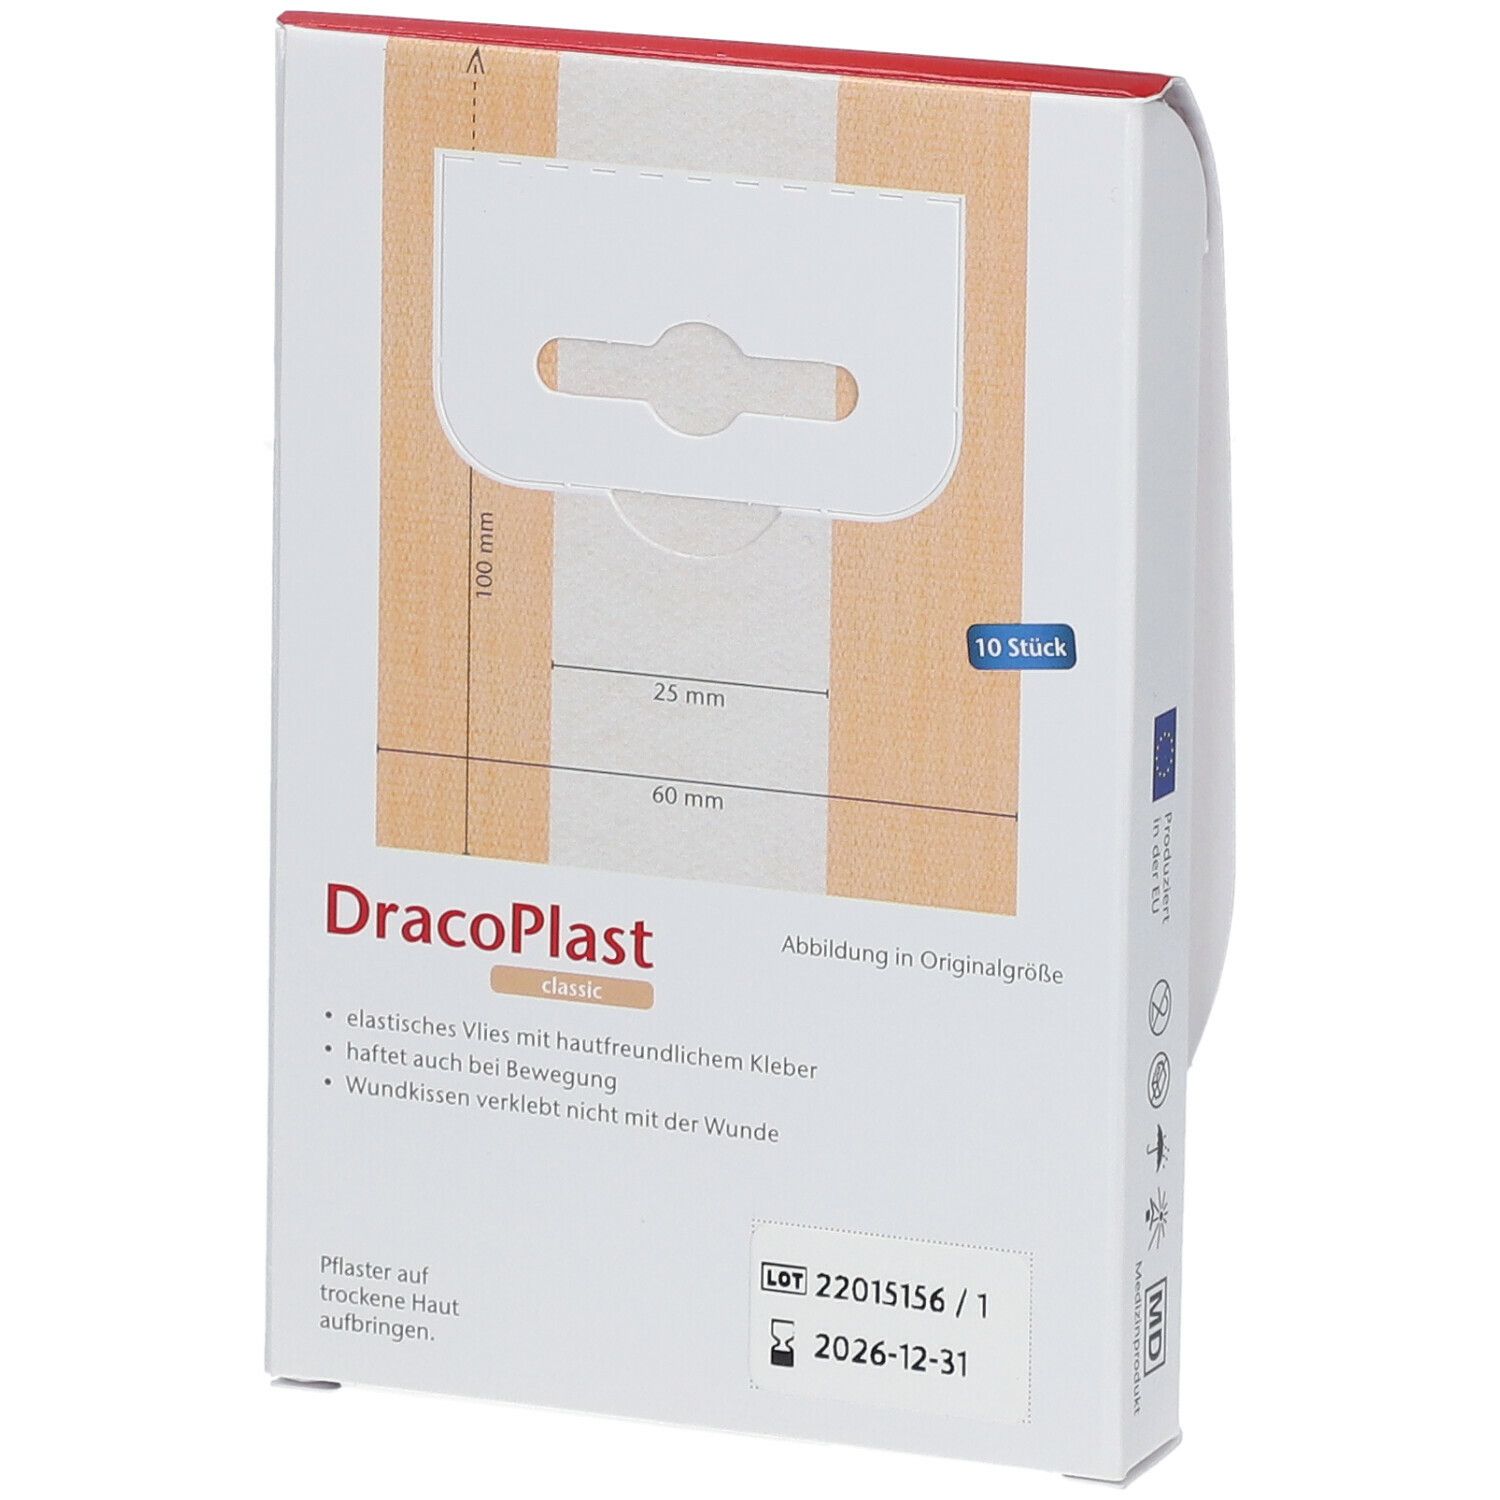 Dracoplast Classic Pflaster 10 x 6 cm